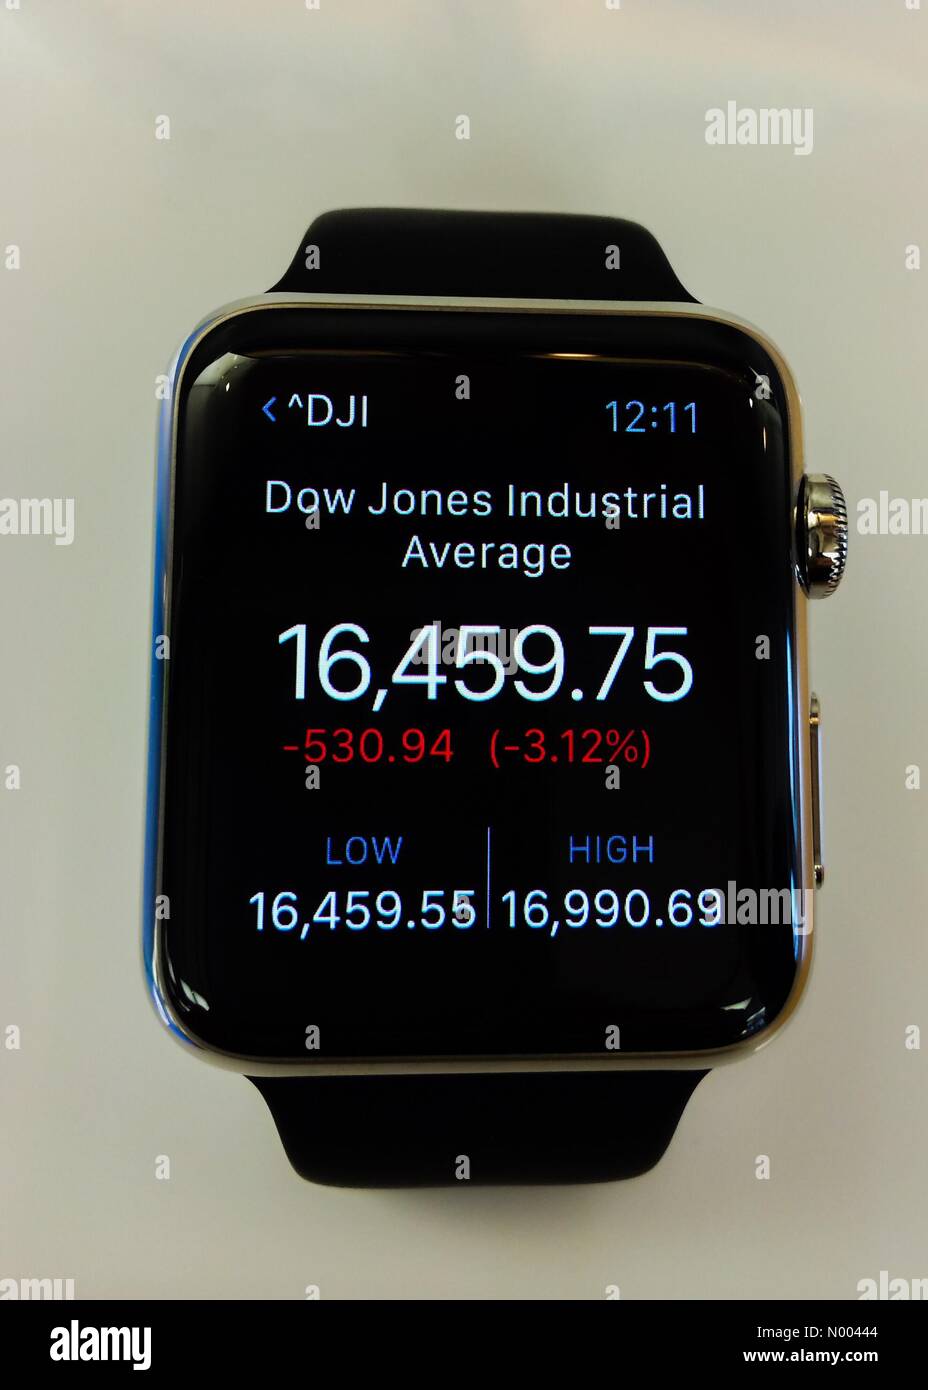 Stock Market Crash - USA An Apple Watch zeigt den Dow Jones Industrial Average (DJI) sank-530,940 Punkte am 21. August 2015. Stockfoto